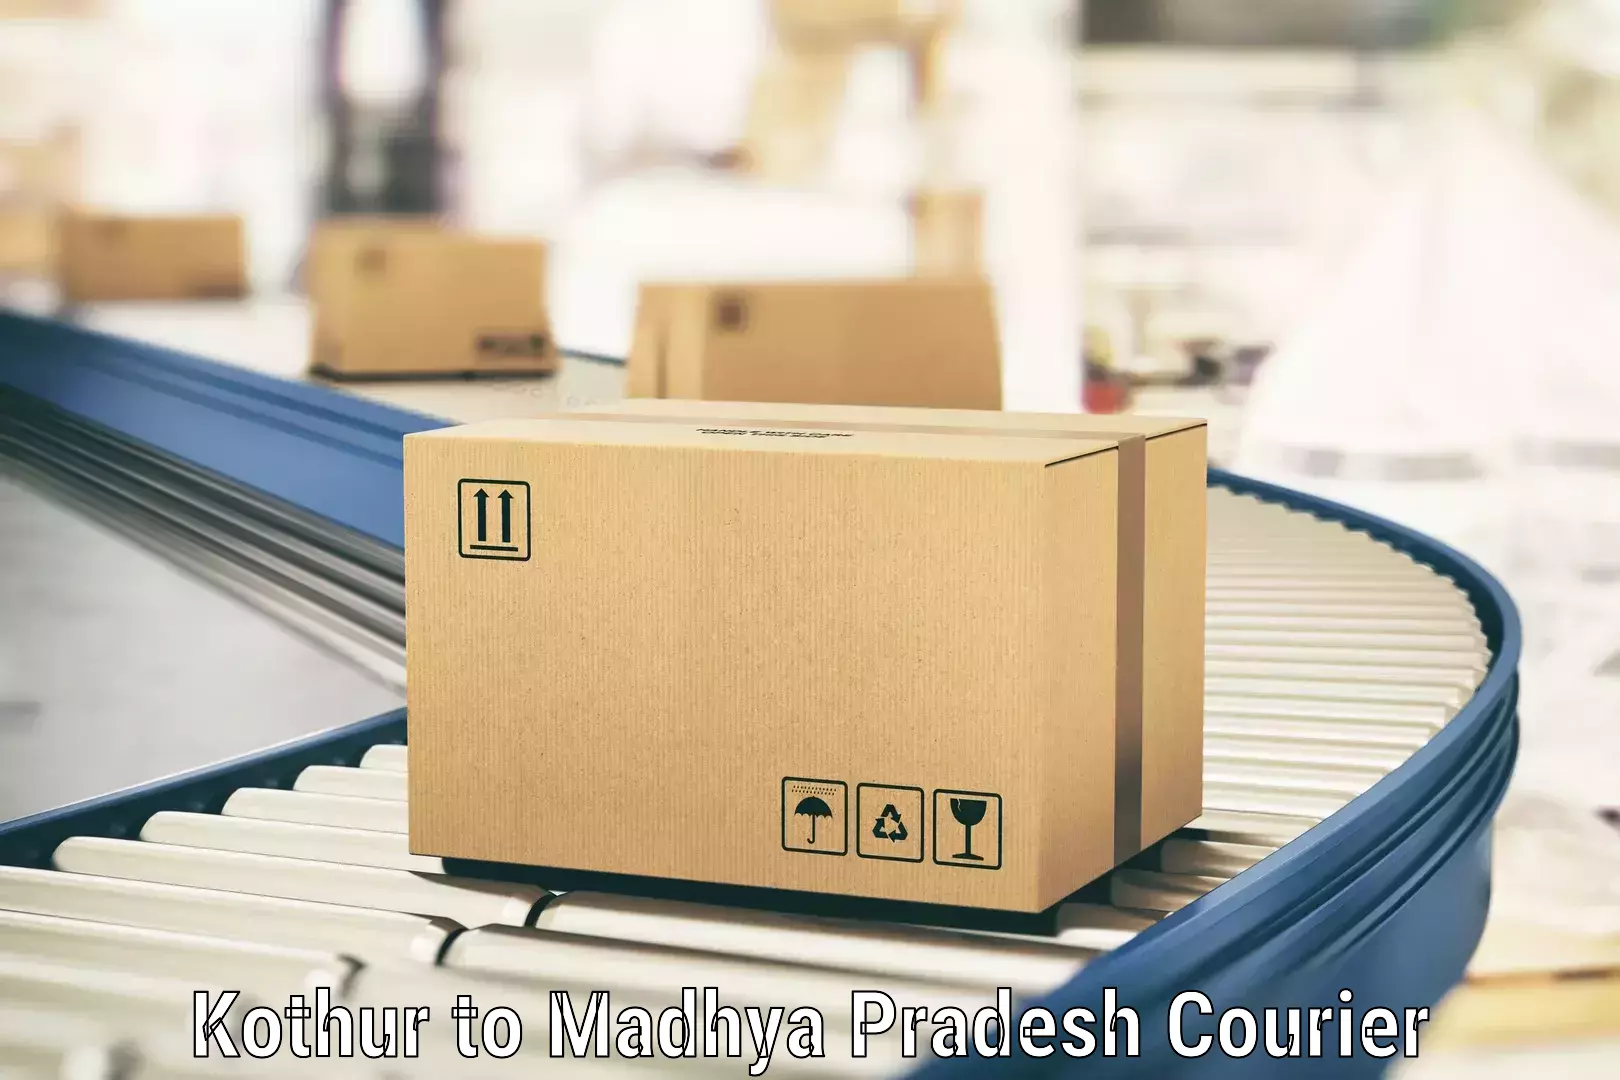 Customer-centric shipping Kothur to Mandsaur